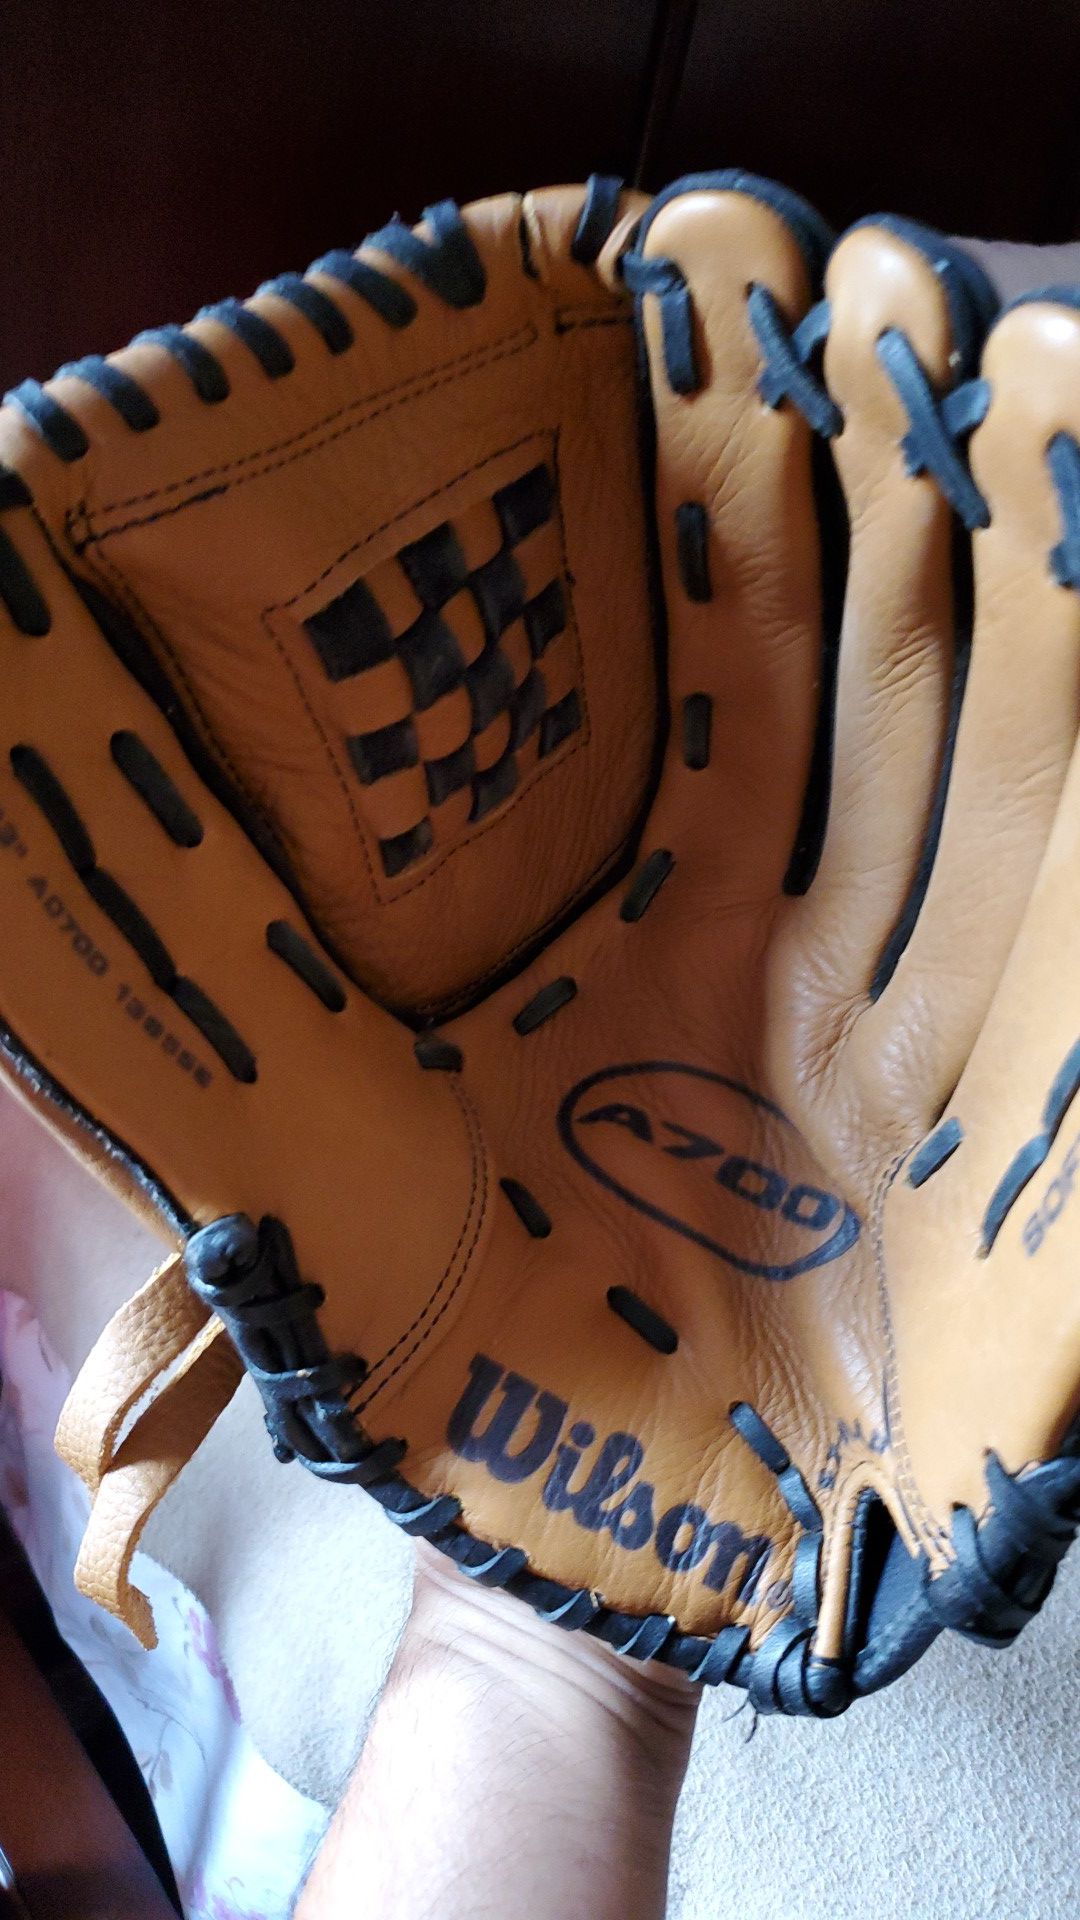 A700 right hand pitch 13" softball glove